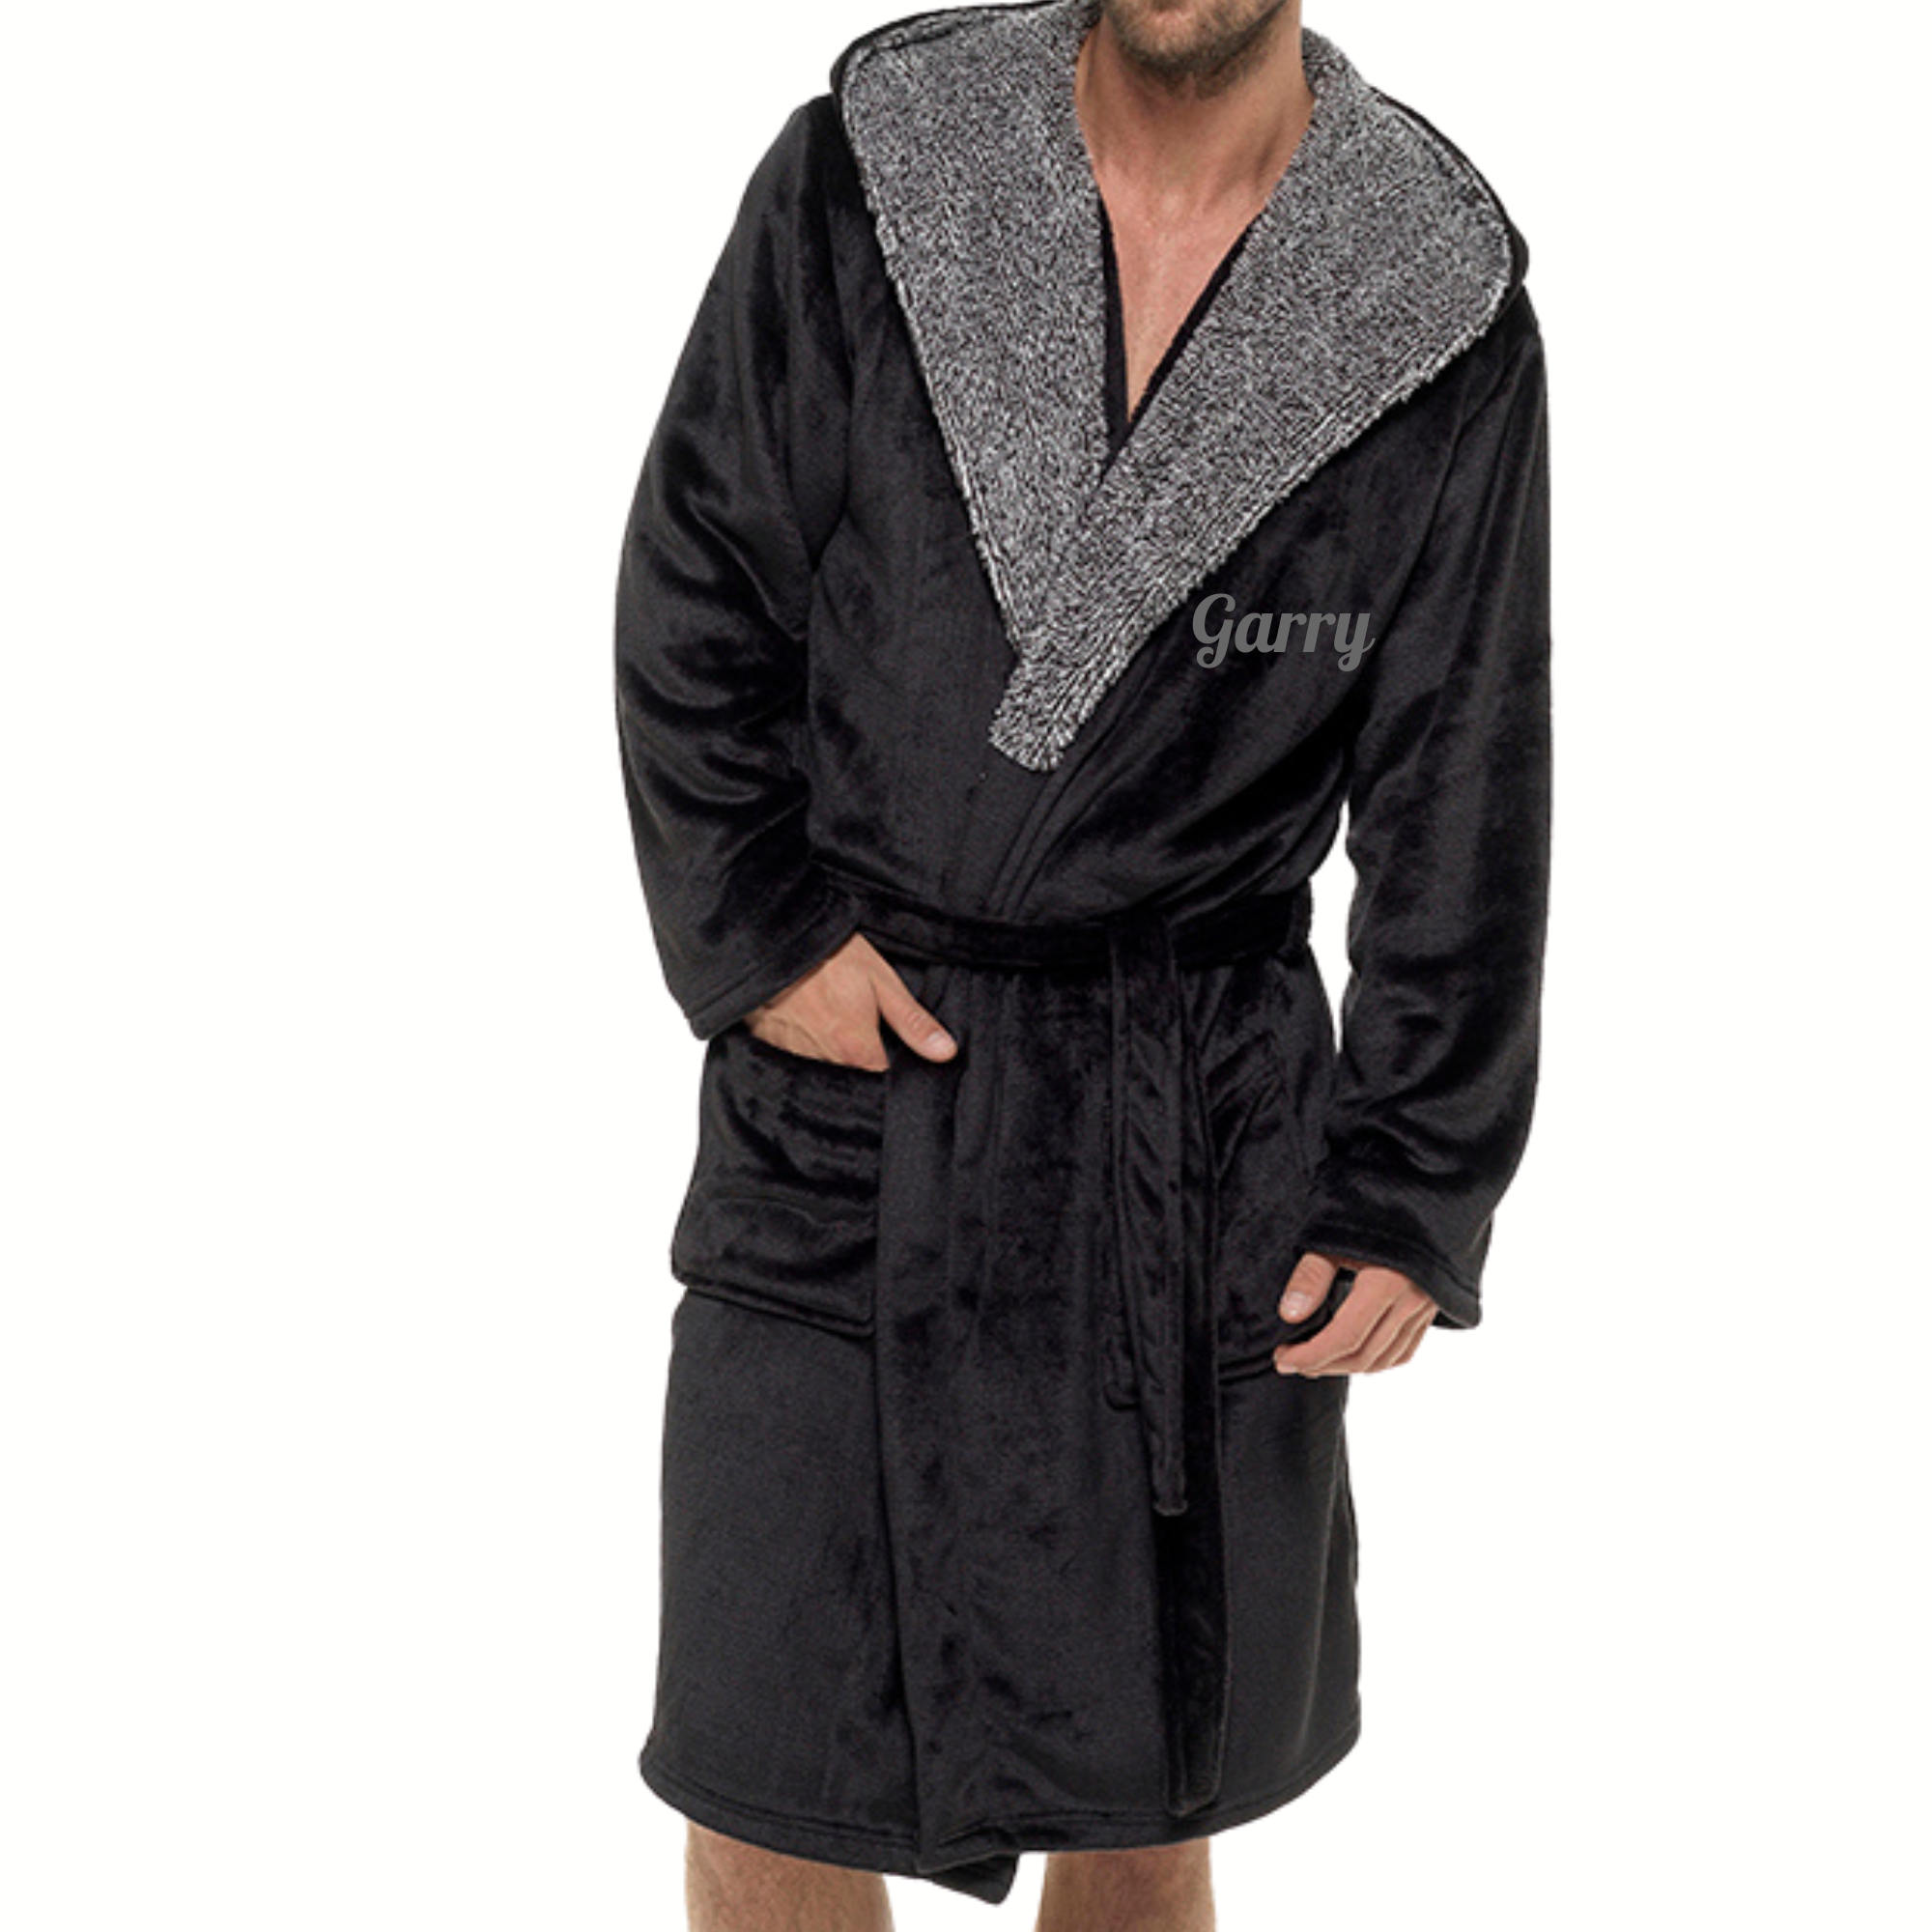 Black Hooded Flannel Robe